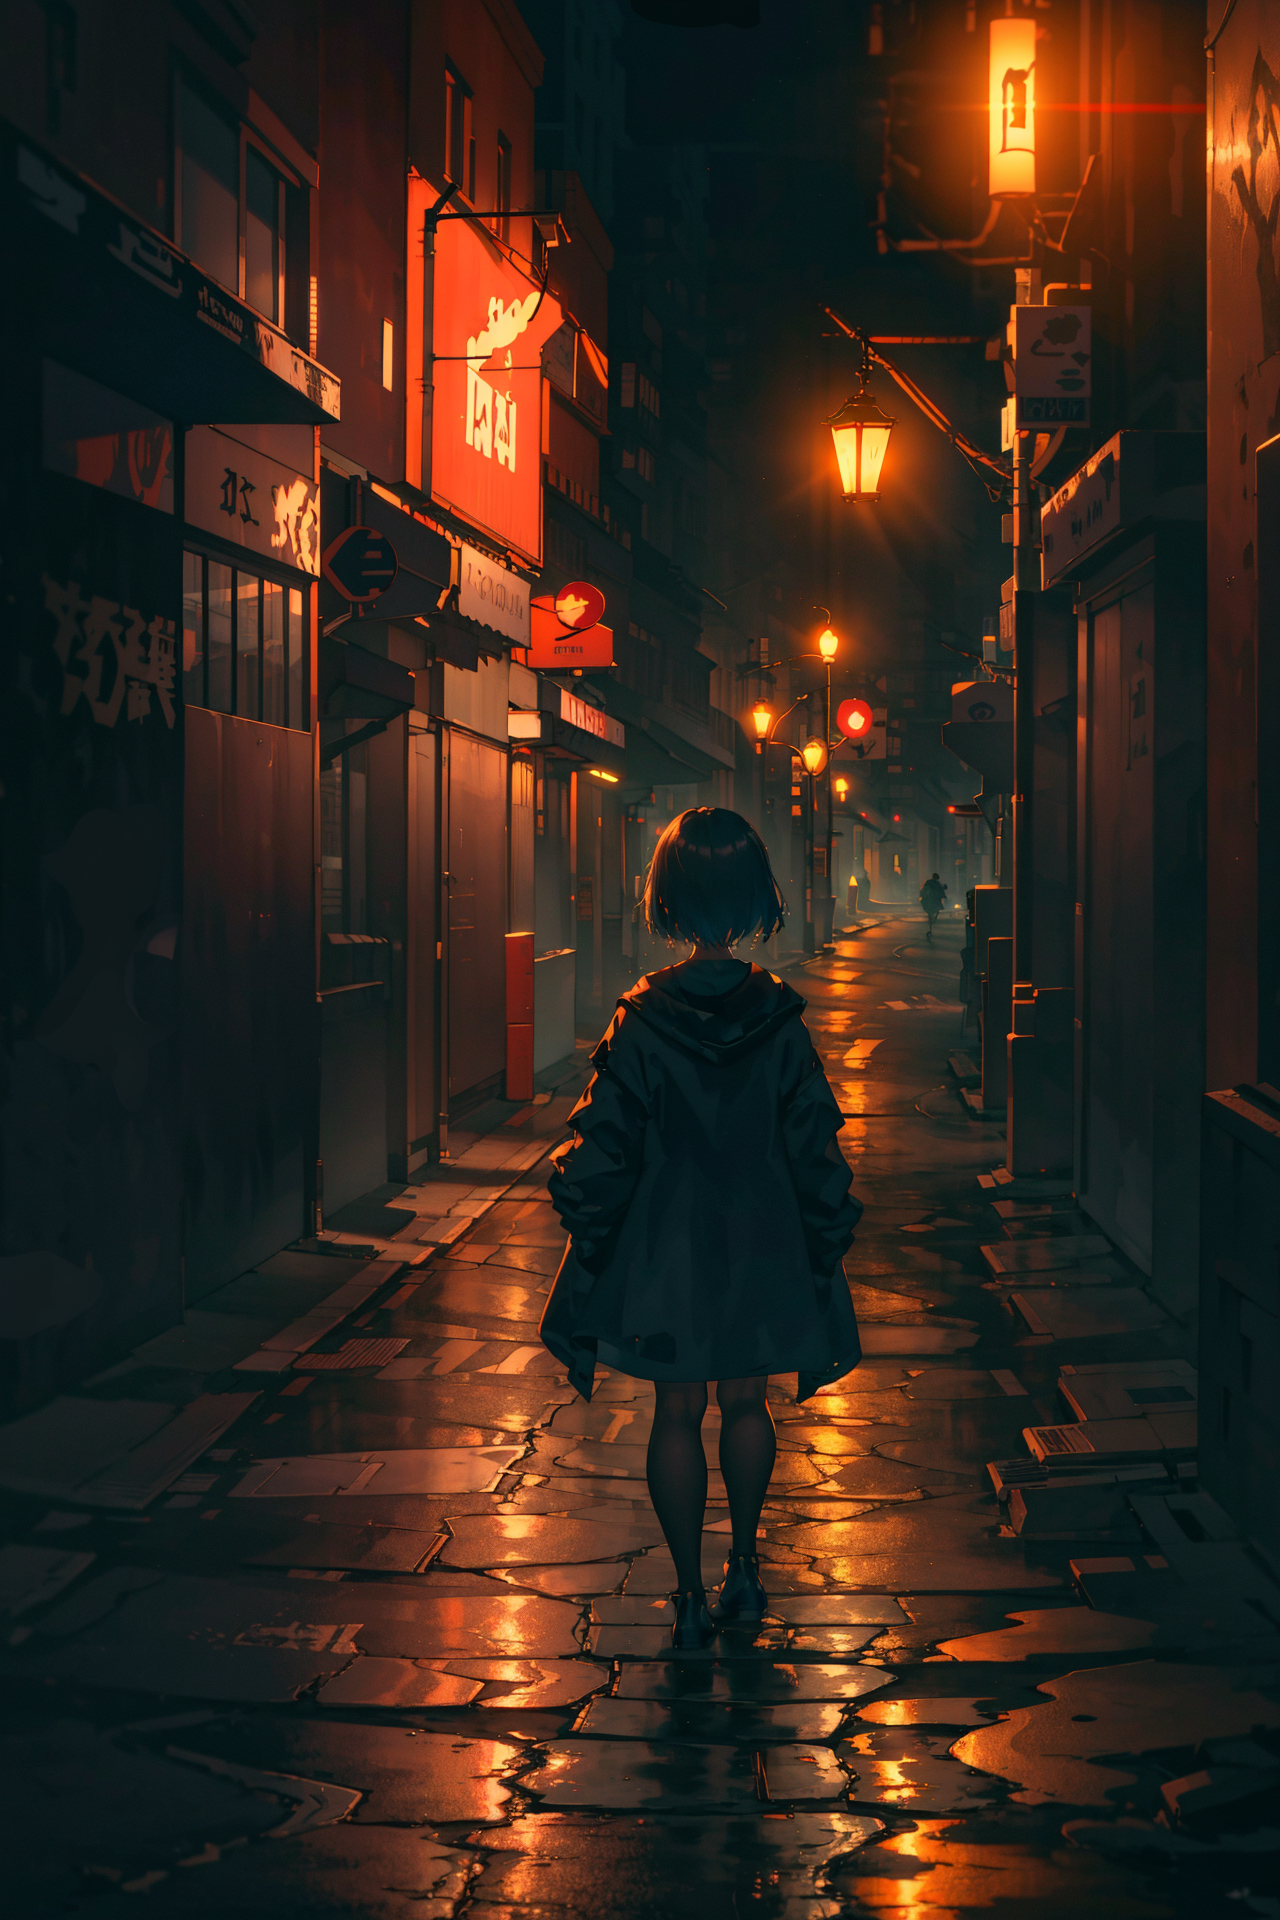 A girl in a raincoat walks down a dark alleyway at night.